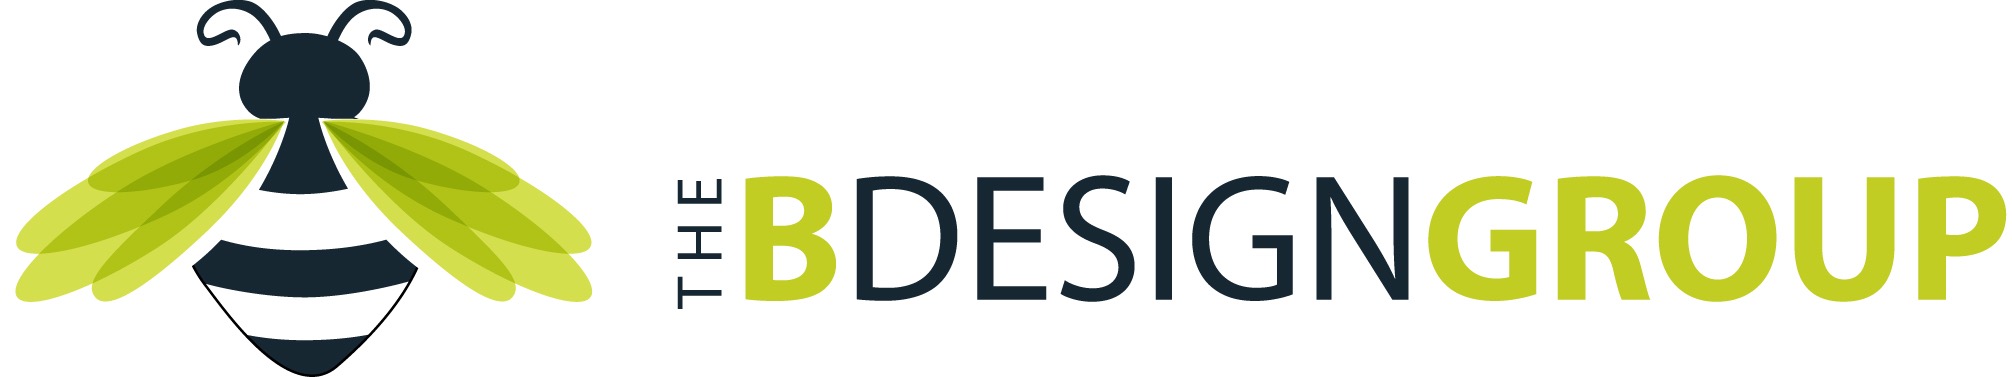 The B Design Group Logo